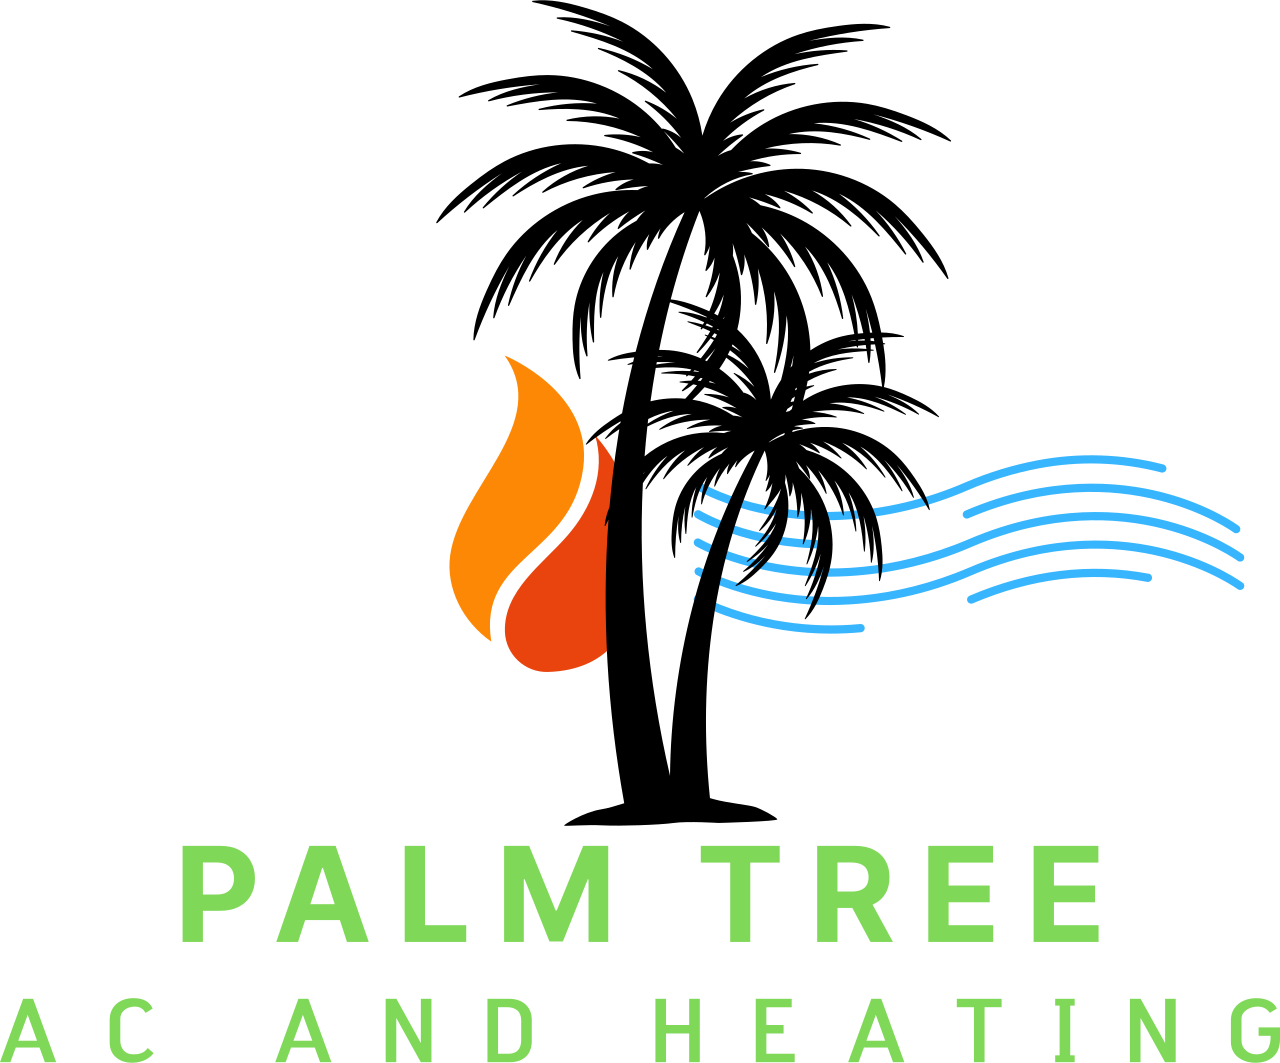 Palm Tree's logo